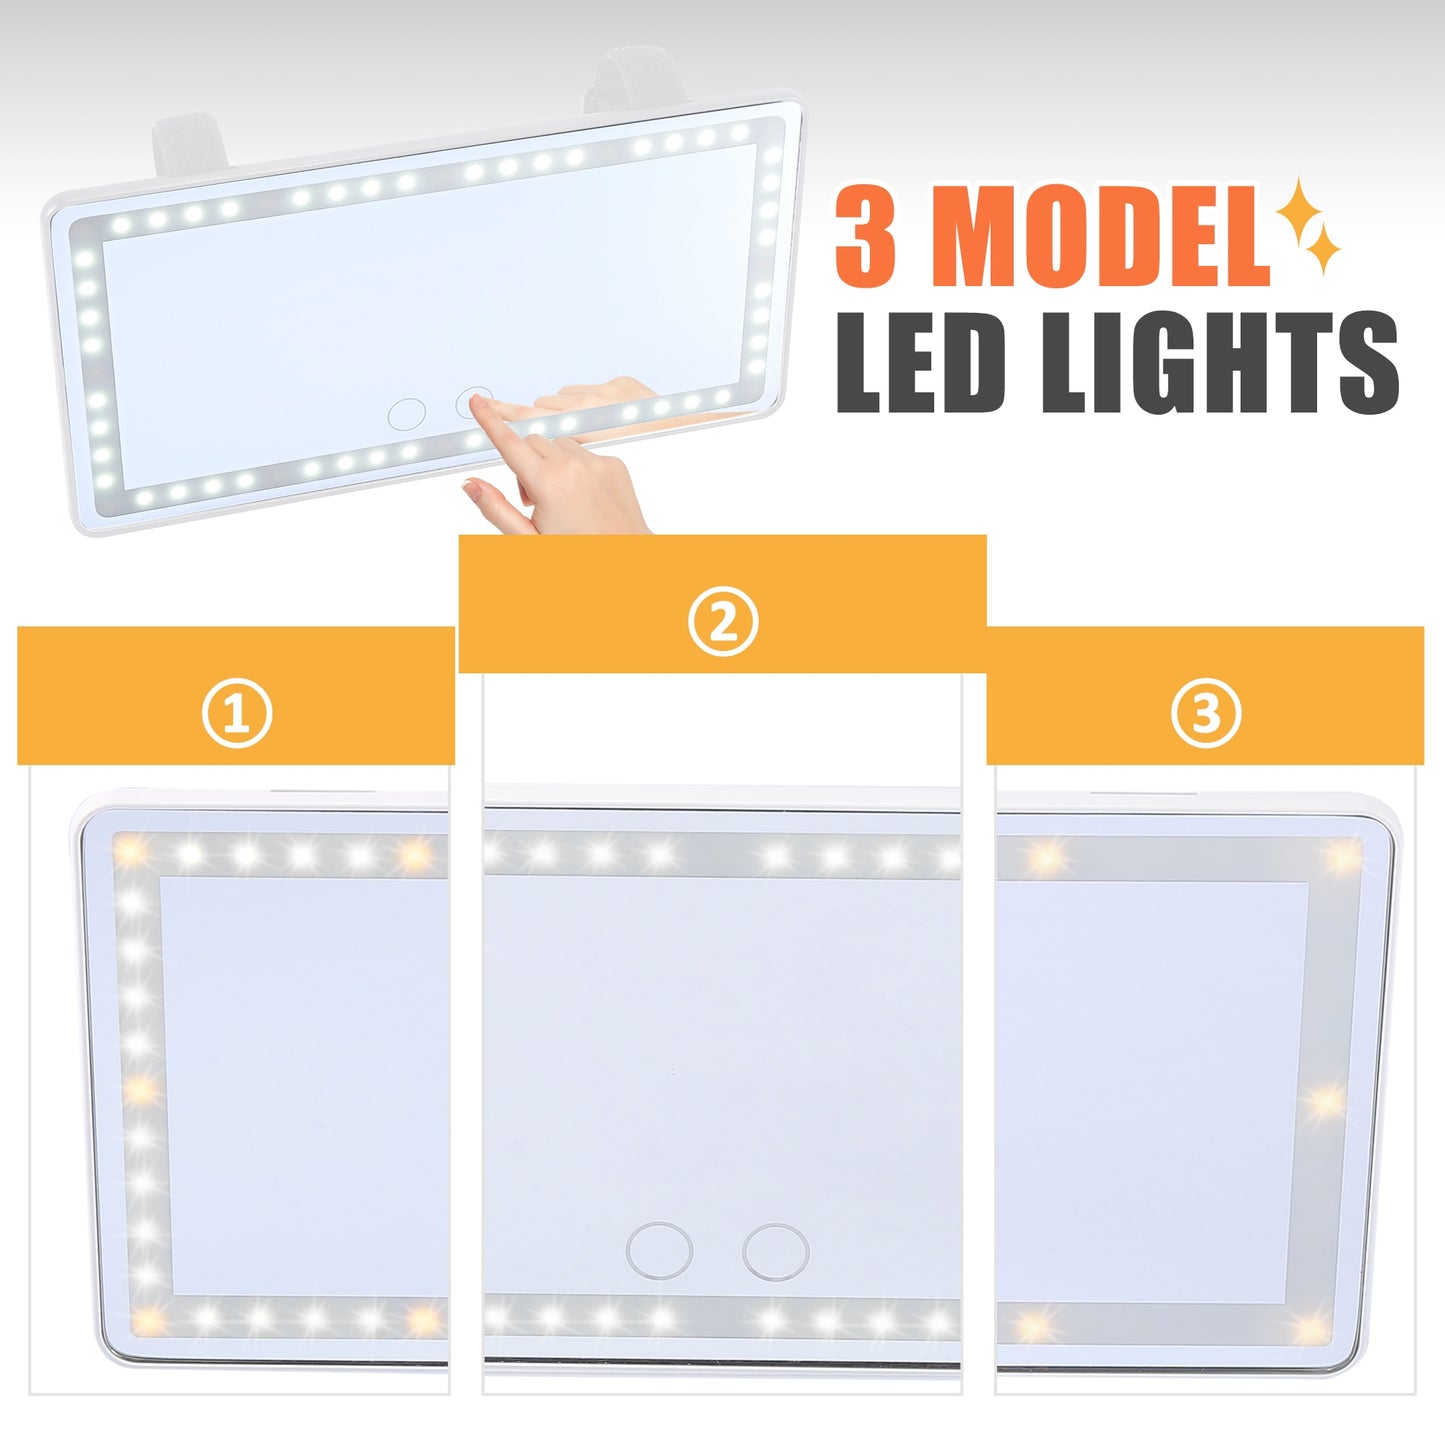 Illuminate™ LED Visor Mirror